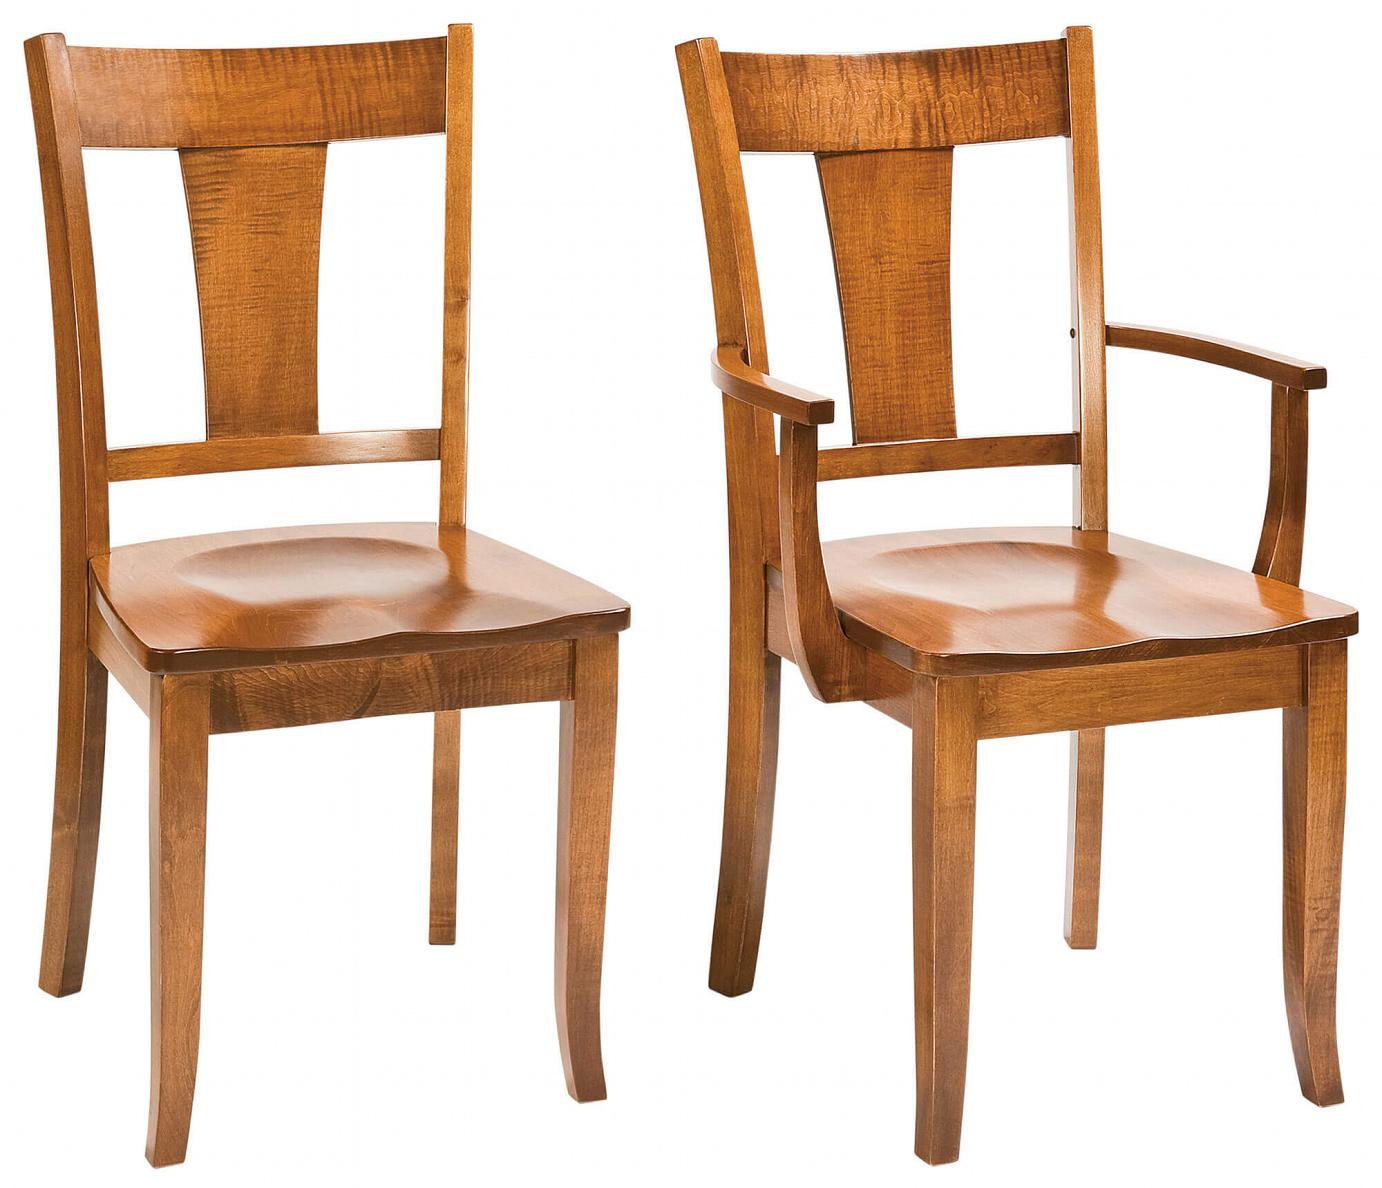 RH Yoder Ellington Chairs